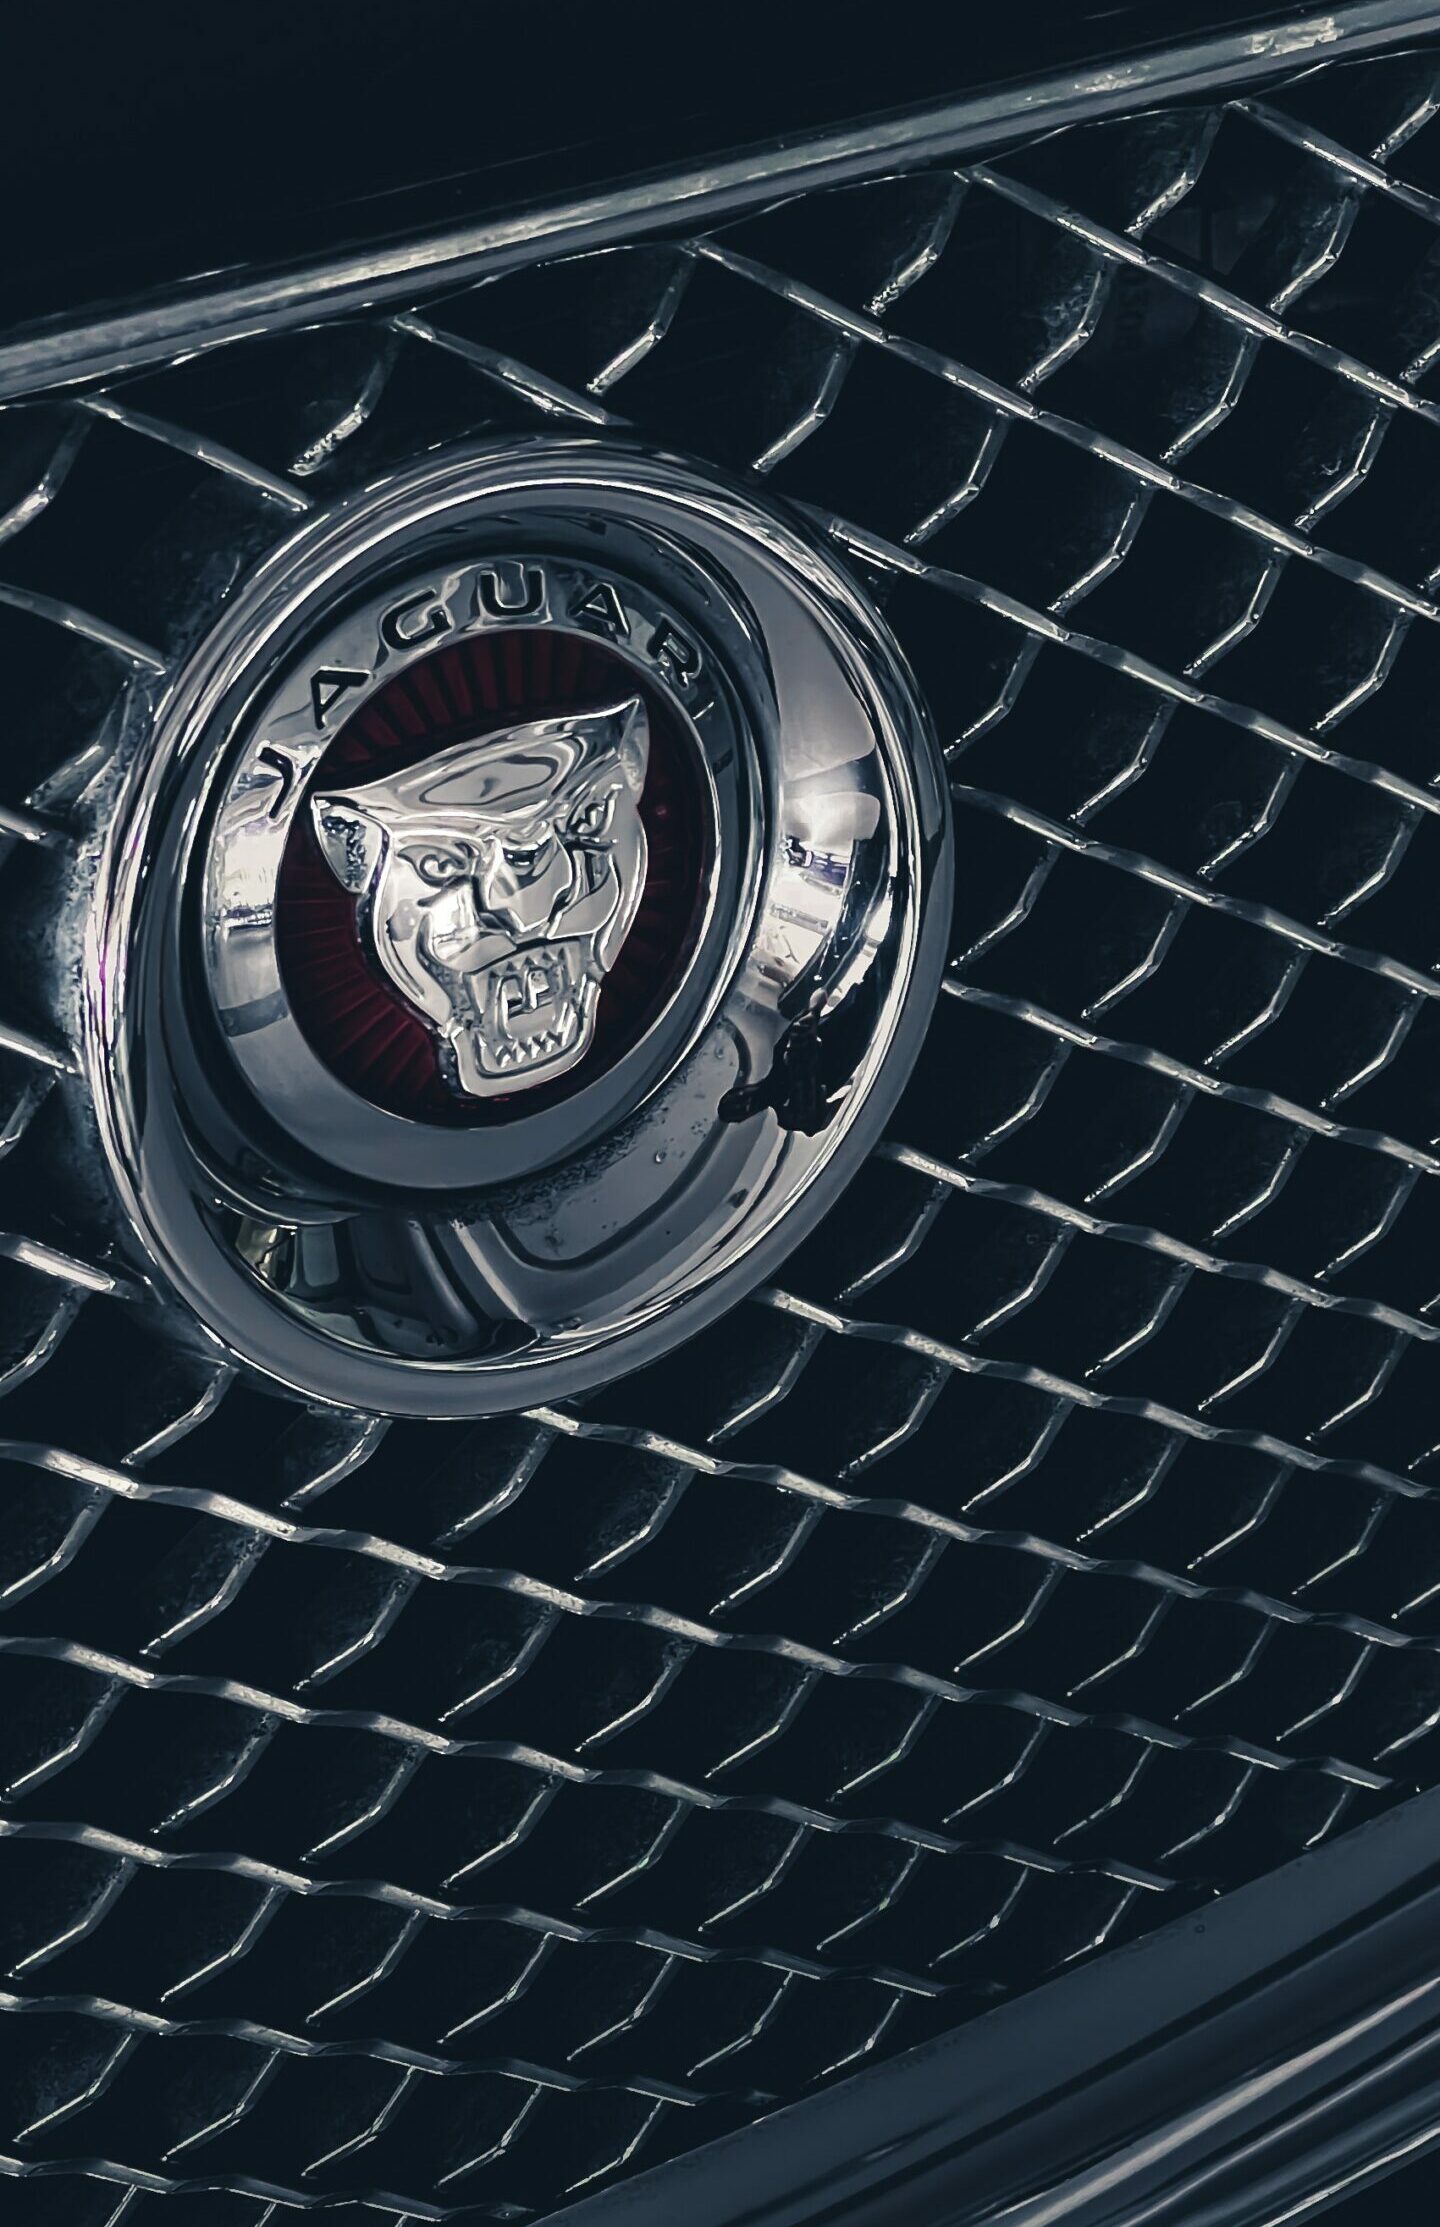 Silver Jaguar logo on front grill